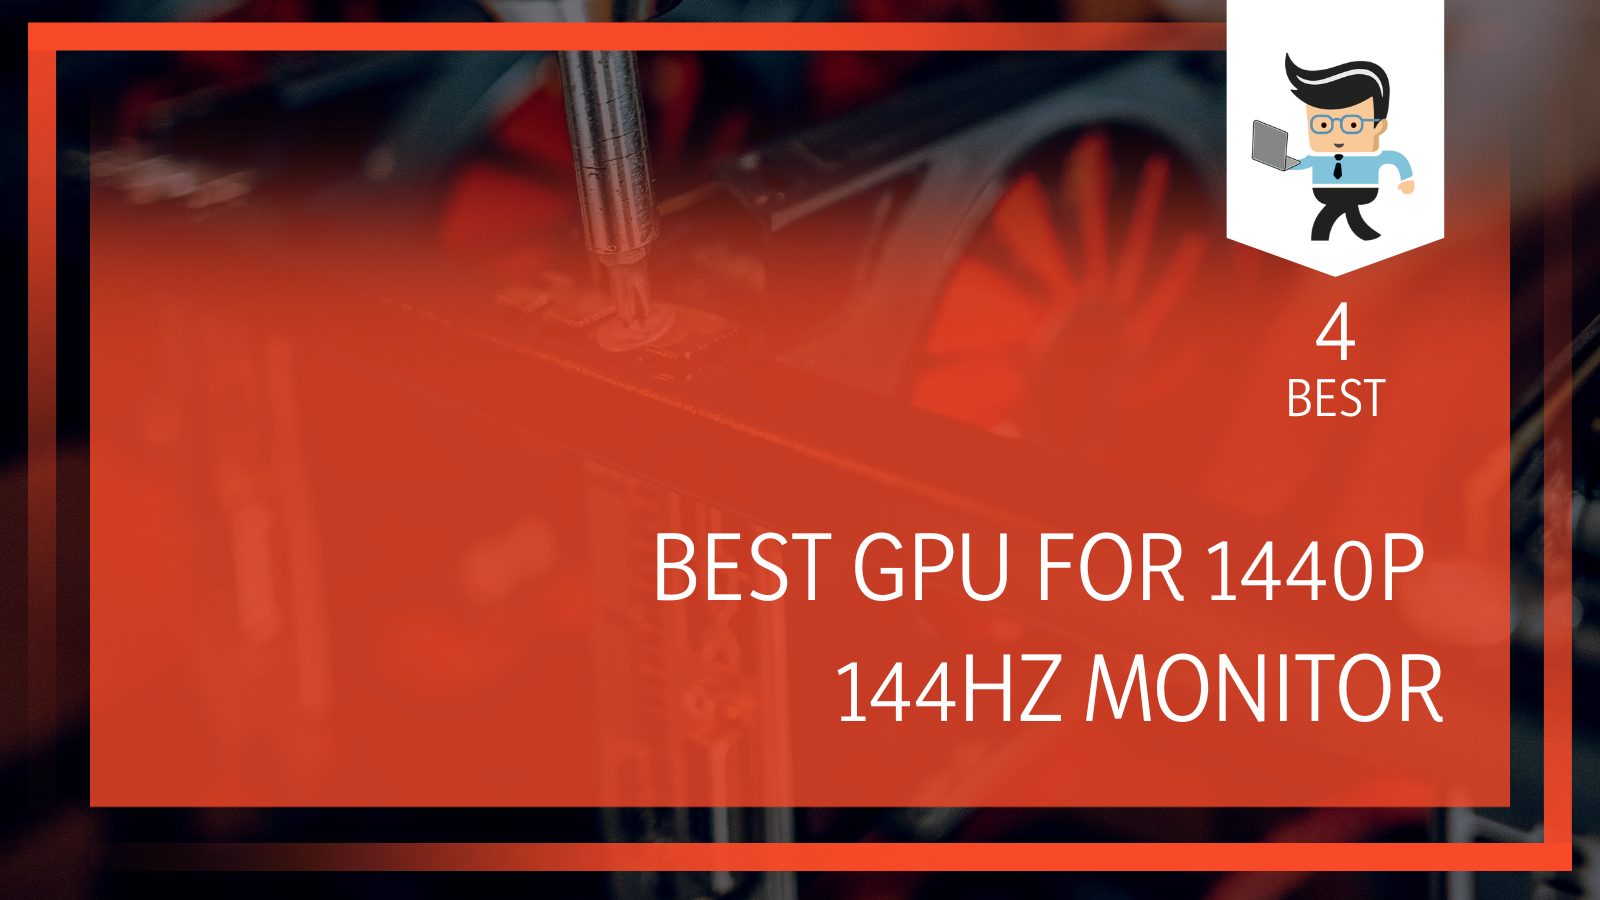 Best GPU for 1440P 144Hz monitor